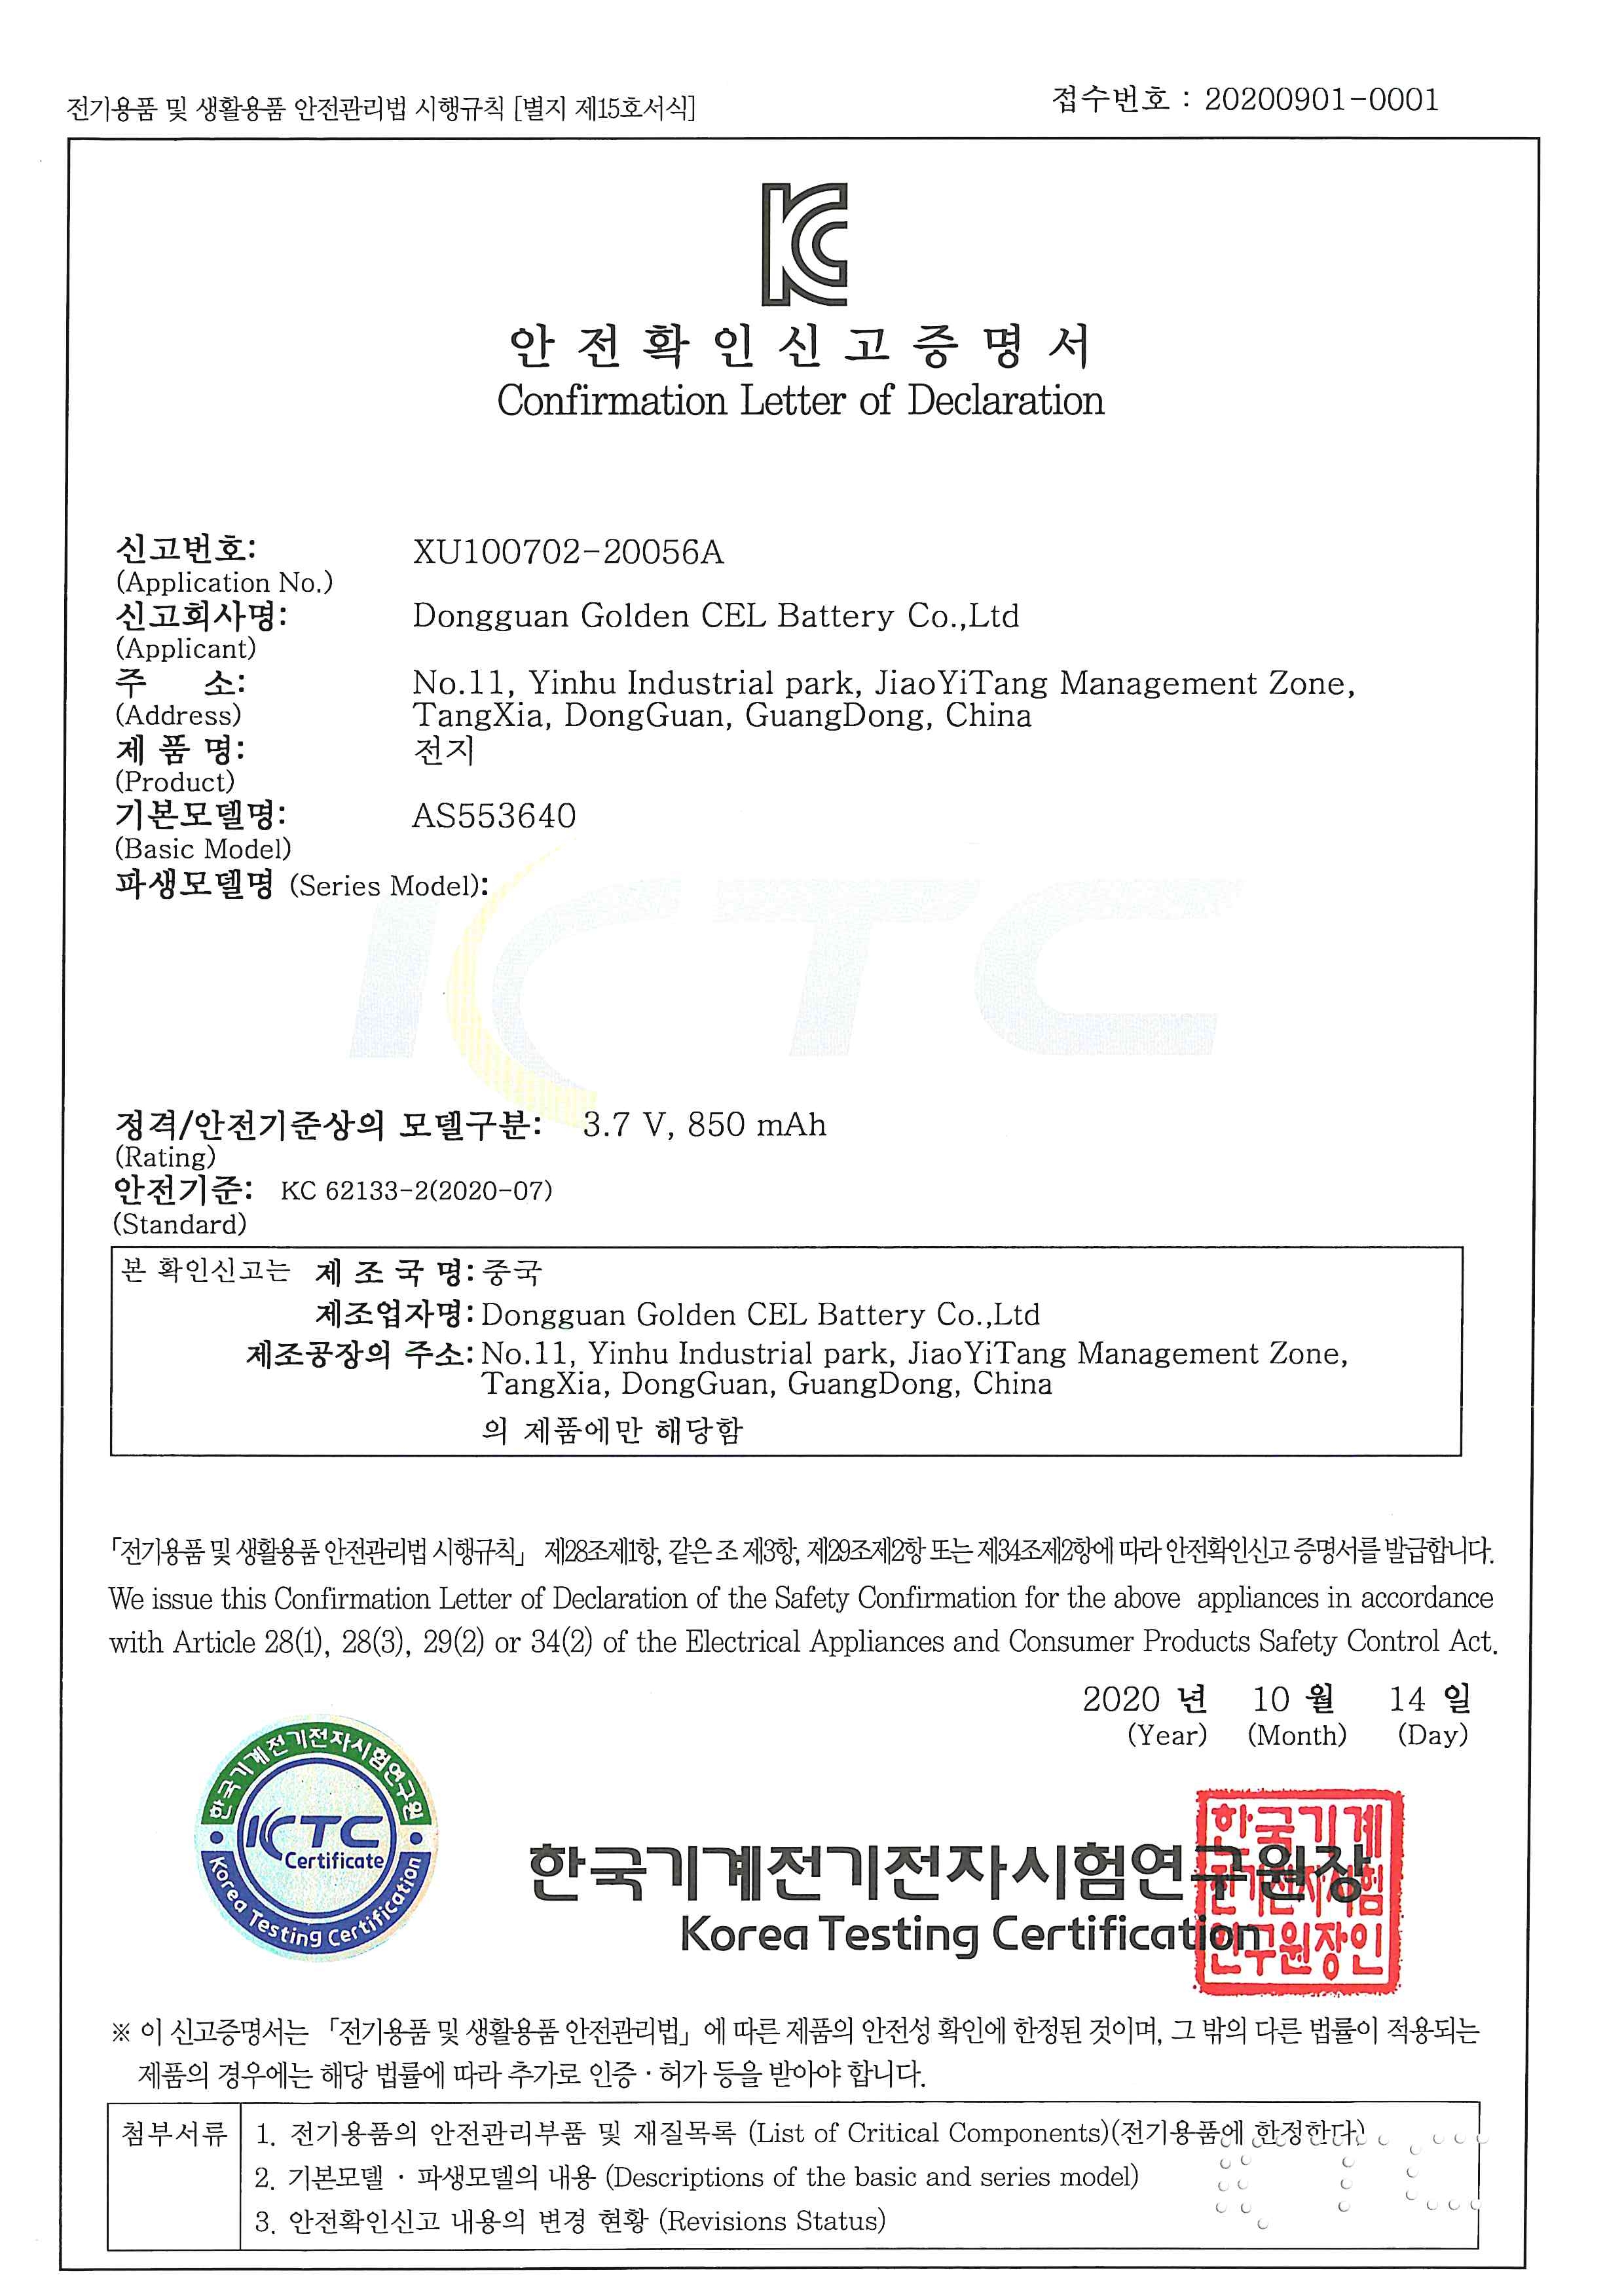 A&S Power 553640 3.7V 850mAh lipo battery KC certification